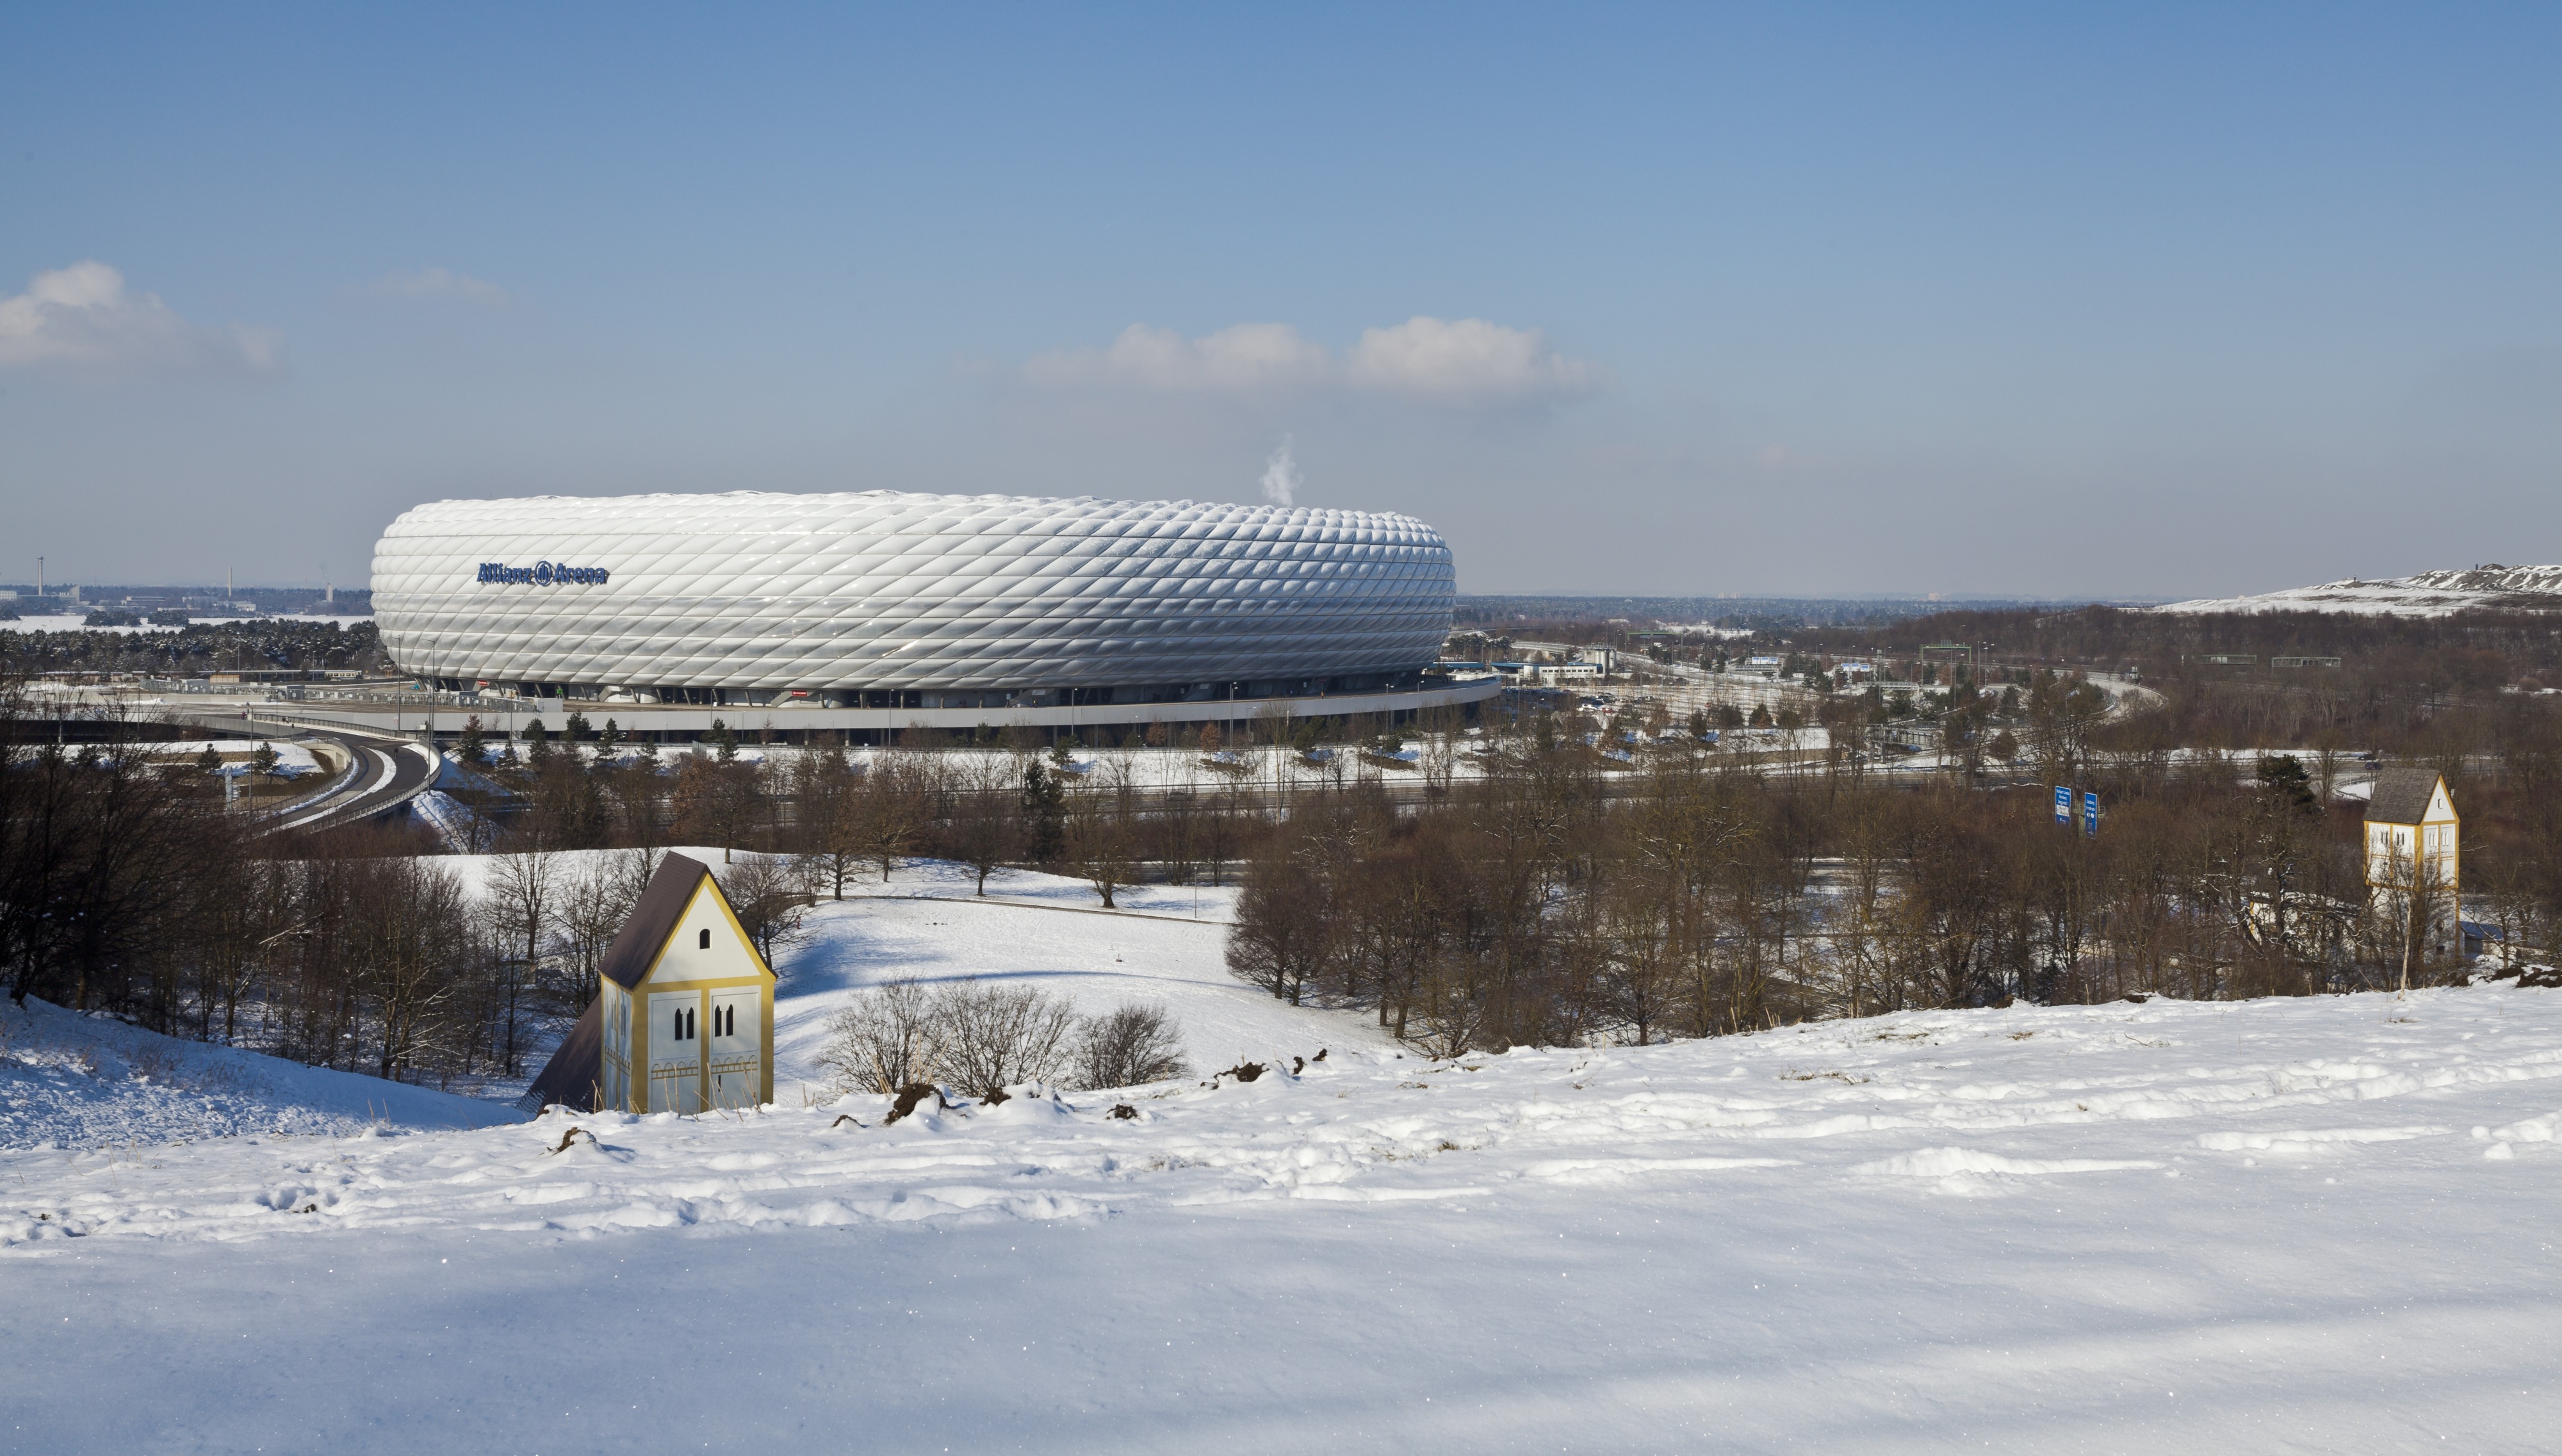 Allianz Arena, Múnich, Alemania, 2013-02-11, DD 09